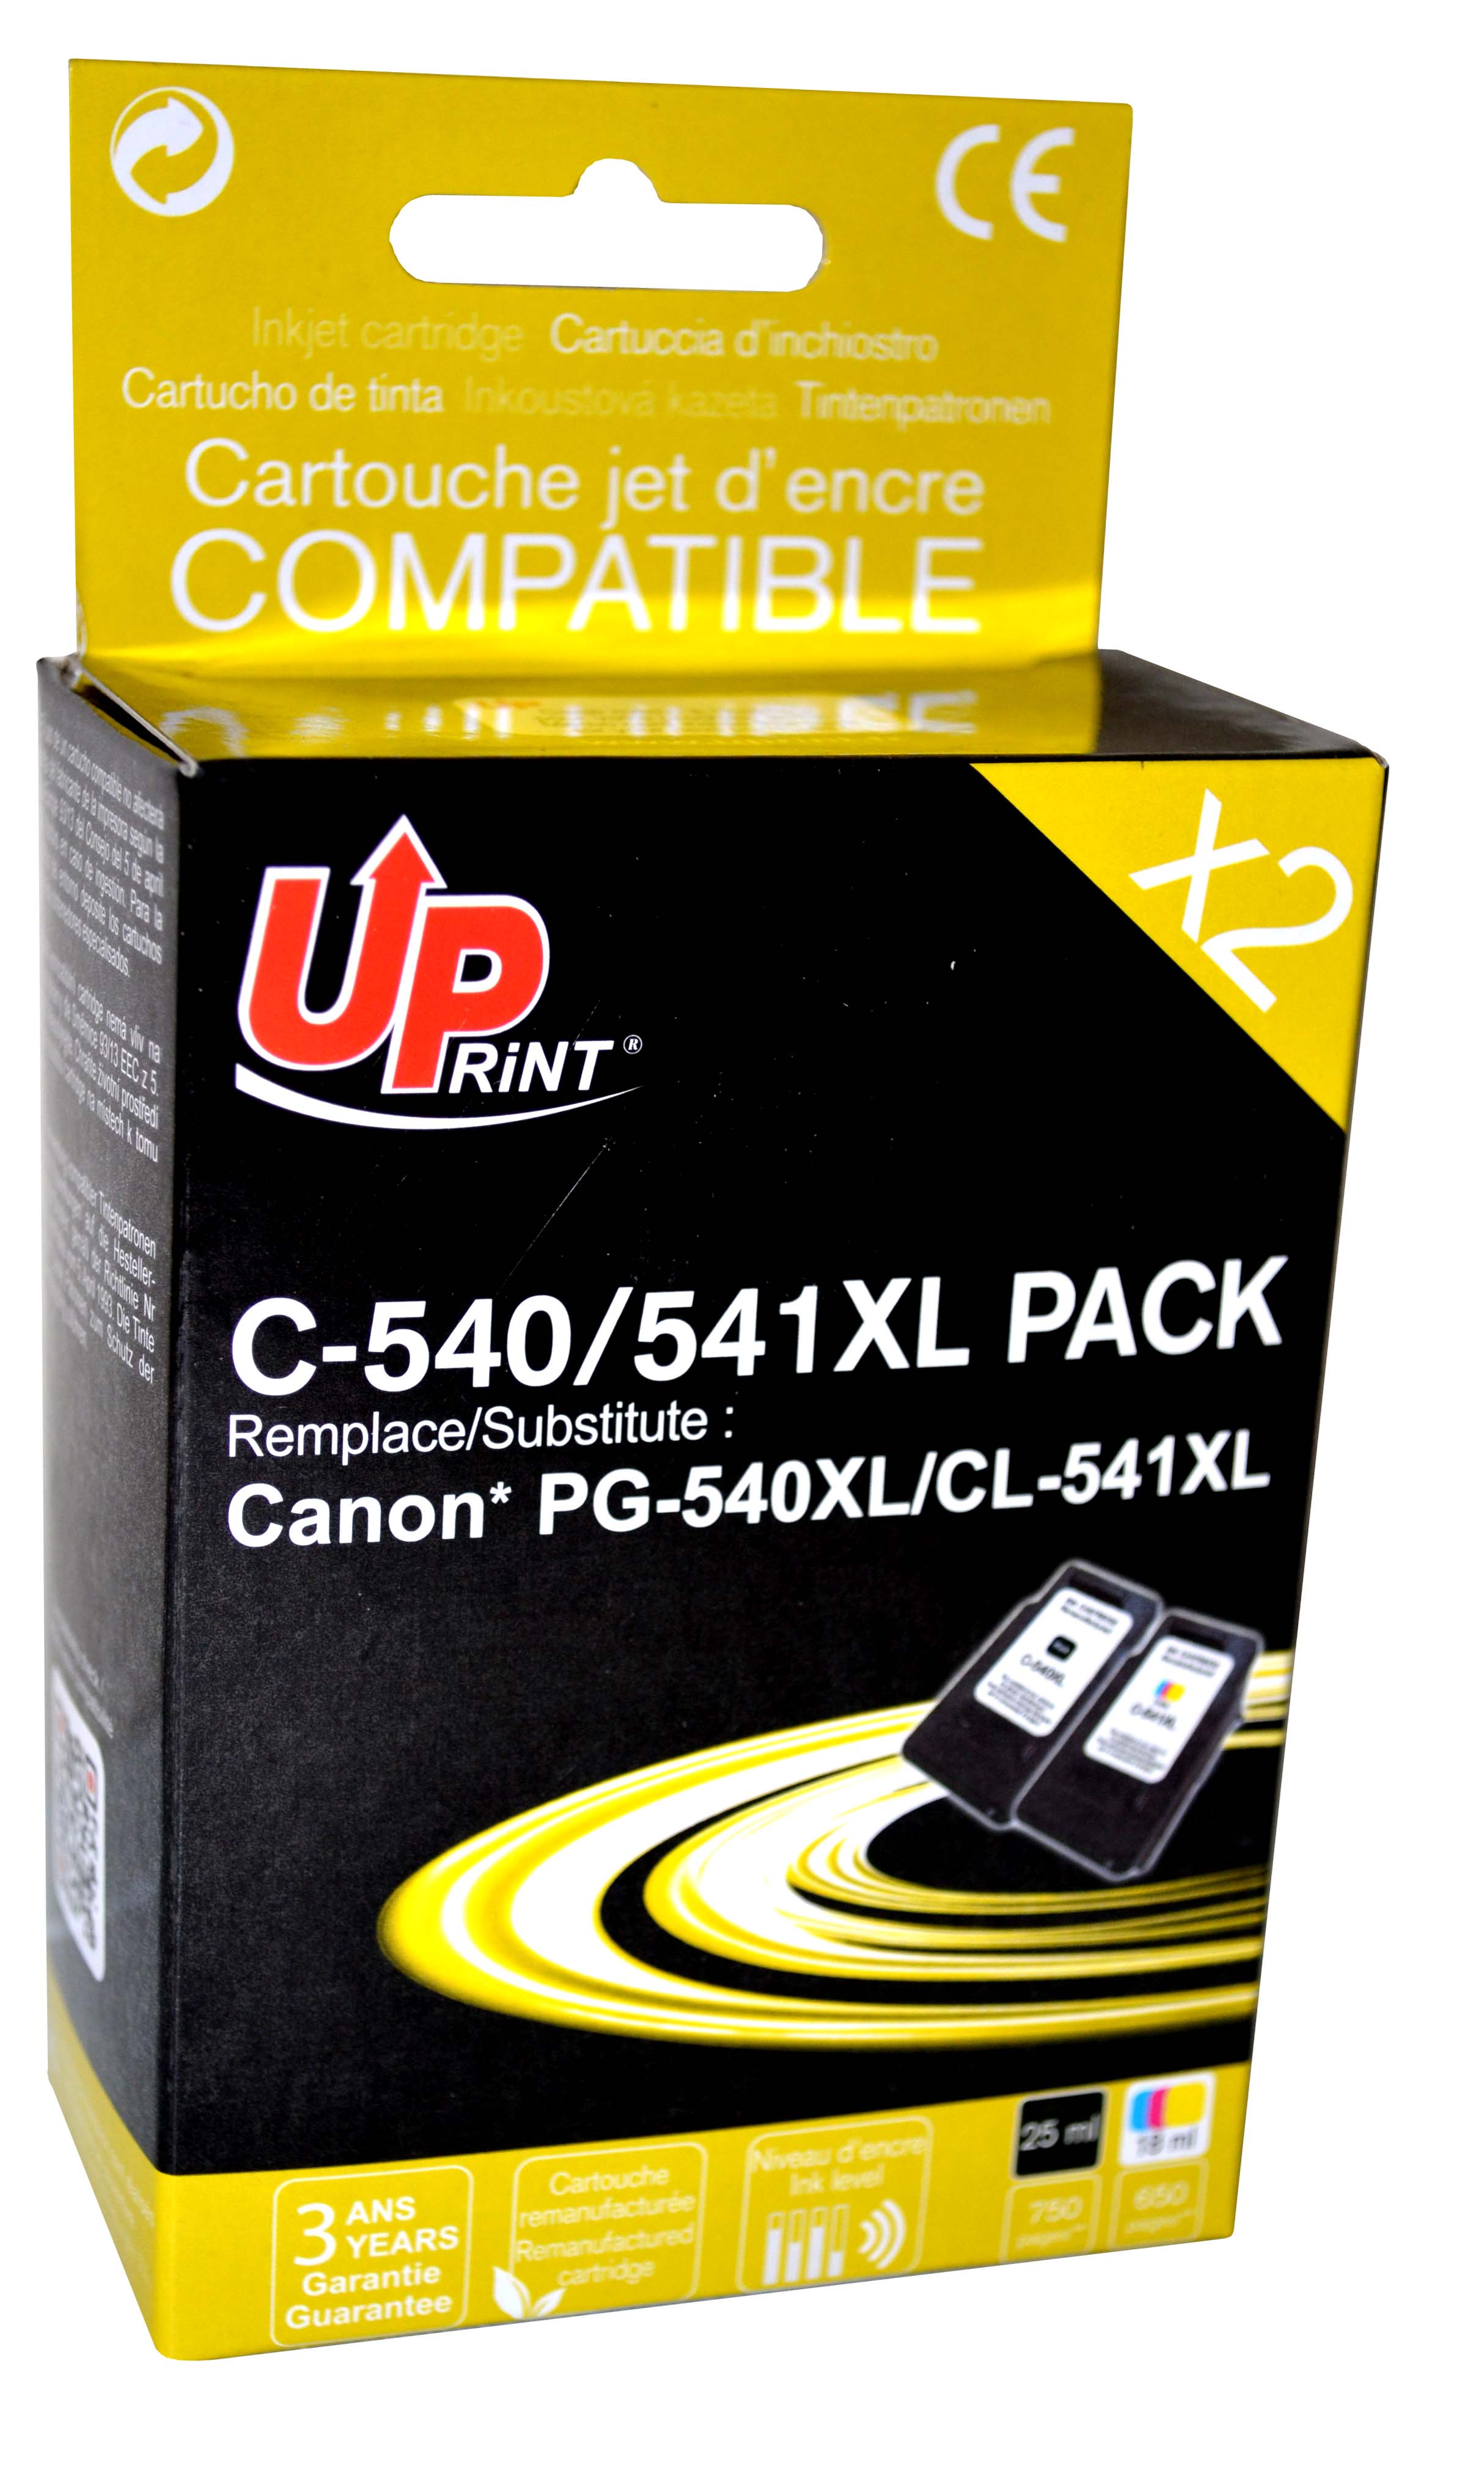 ✓ Pack UPrint compatible CANON PG-540XL/CL-541XL, 2 cartouches